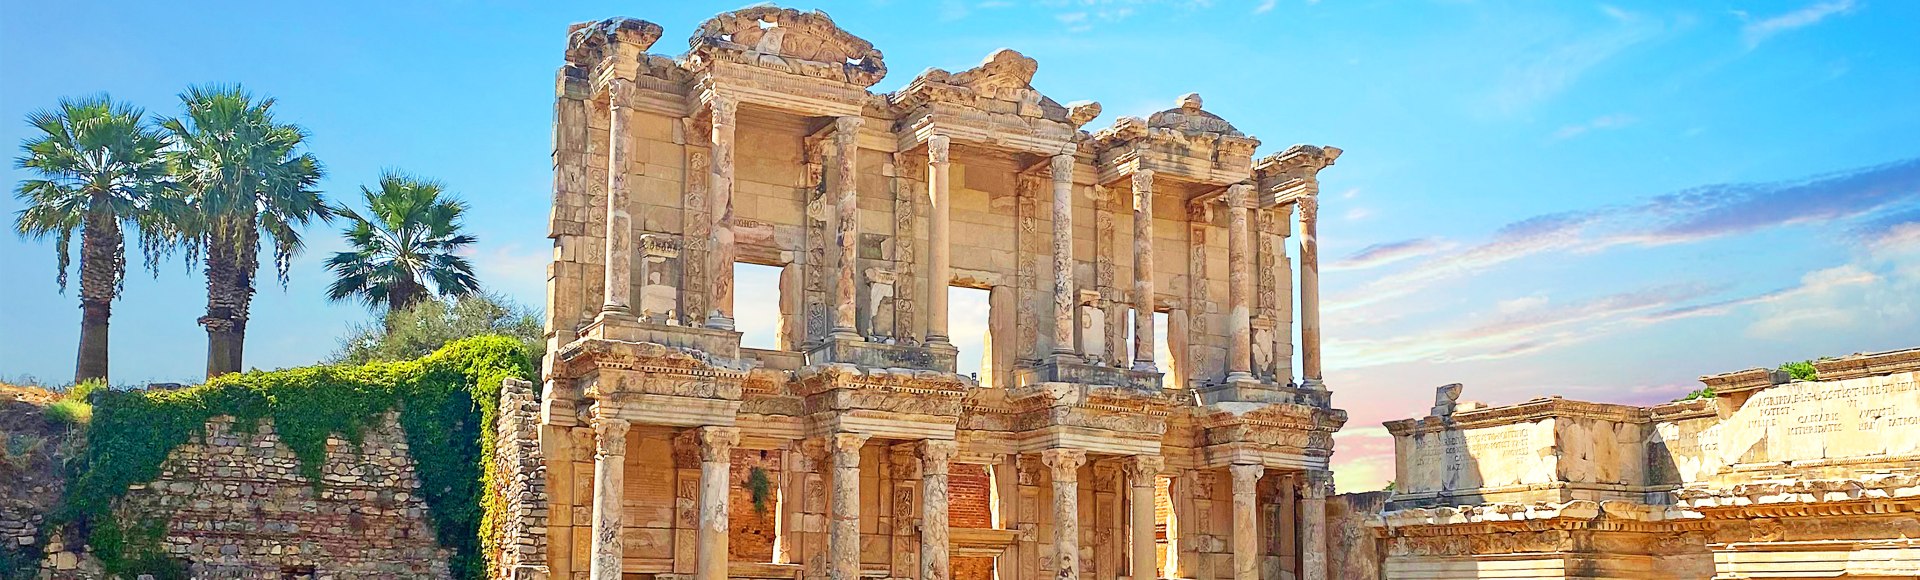 Celsus-Bibliothek in Ephesus, Türkei, © iStockphoto.com - prmustafa